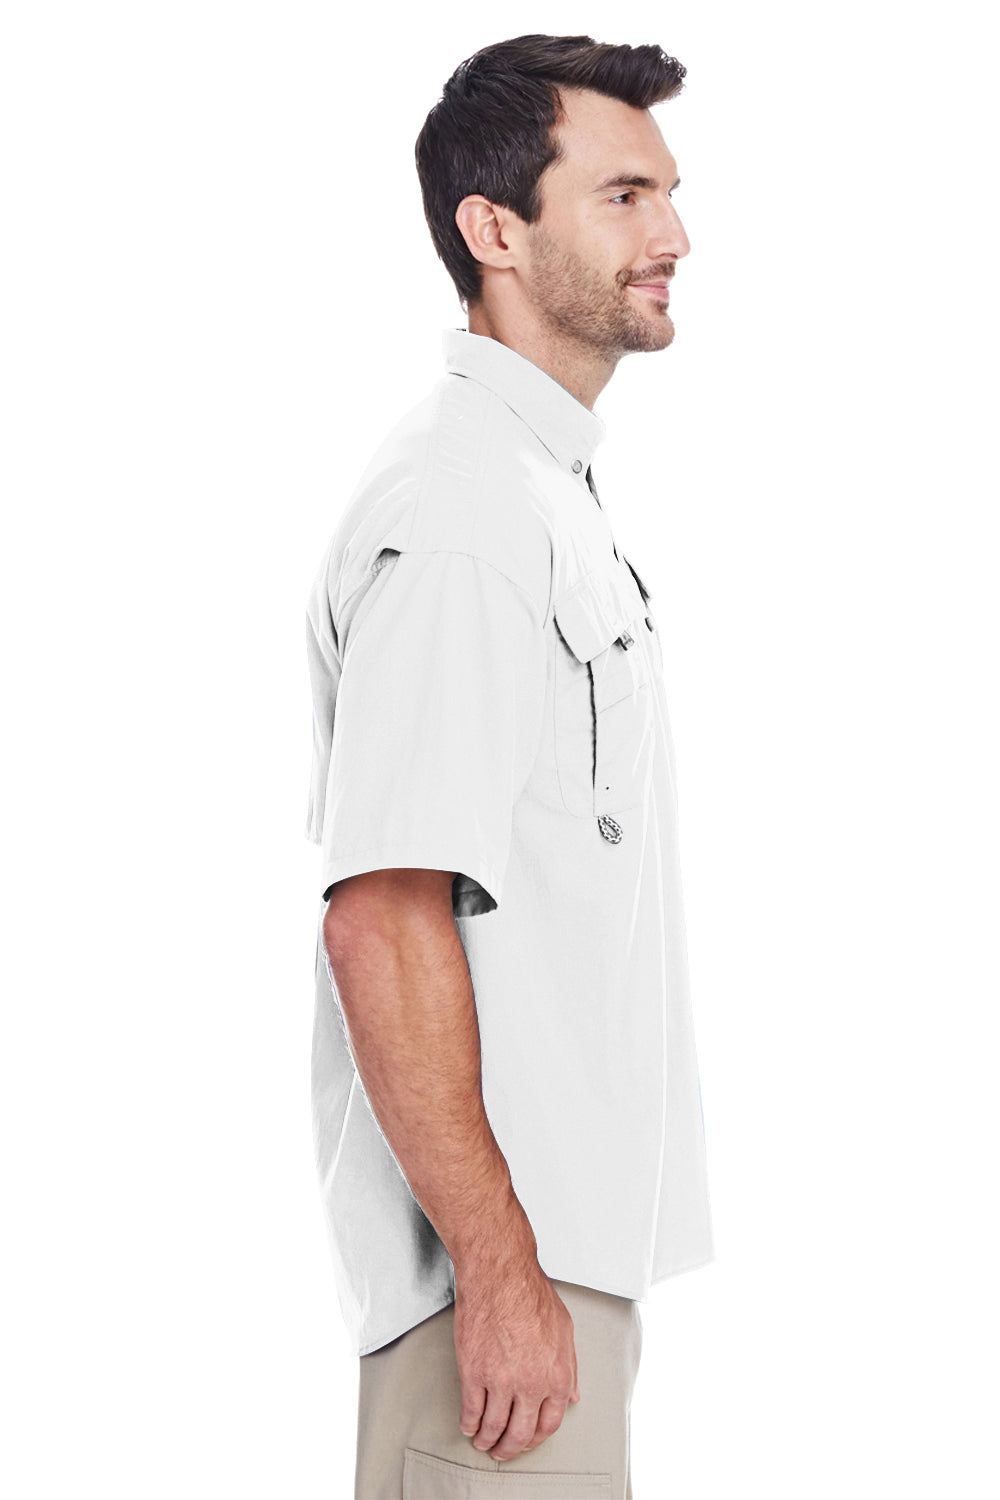 Columbia 7047 Mens Bahama II Moisture Wicking Short Sleeve Button Down Shirt w/ Double Pockets White Side